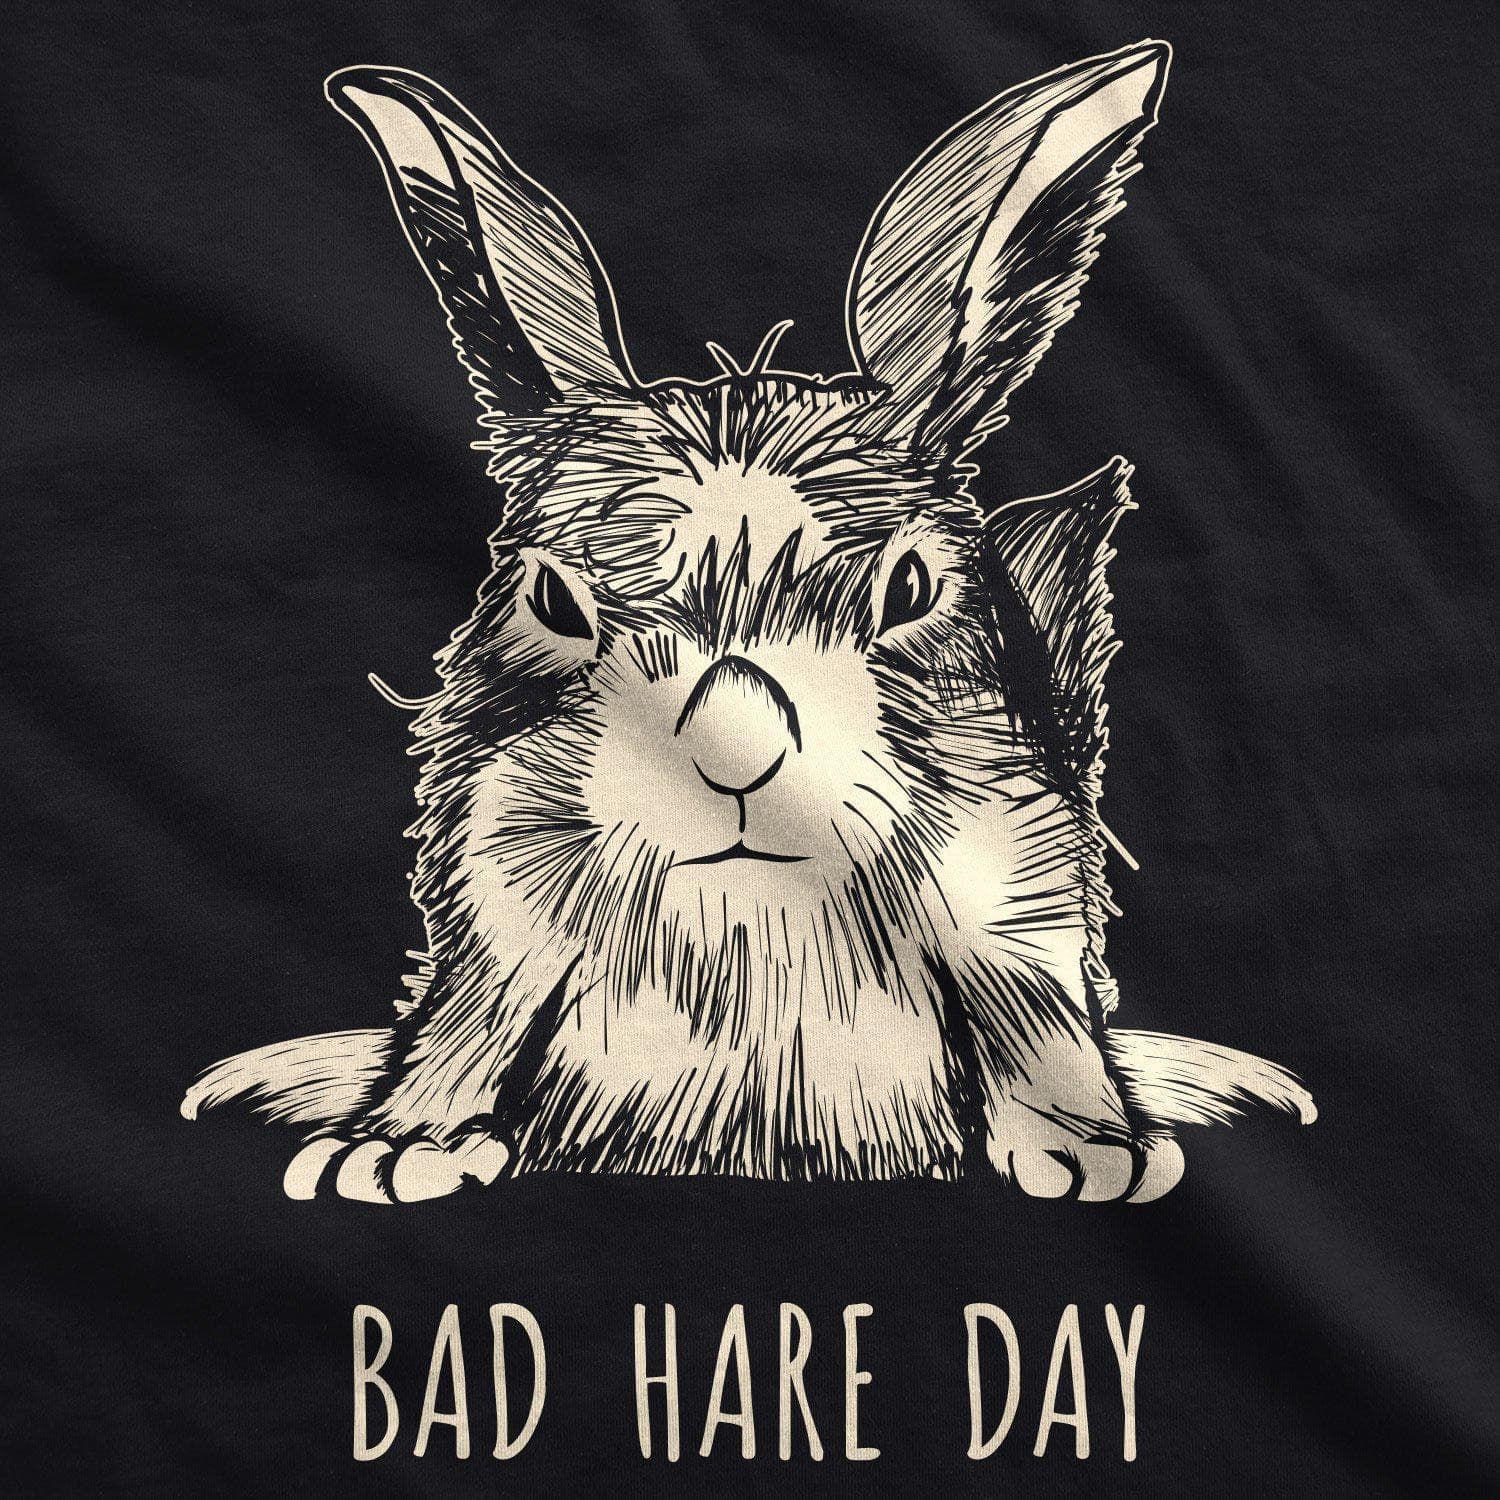 Bad Hare Day Men's Tshirt  -  Crazy Dog T-Shirts